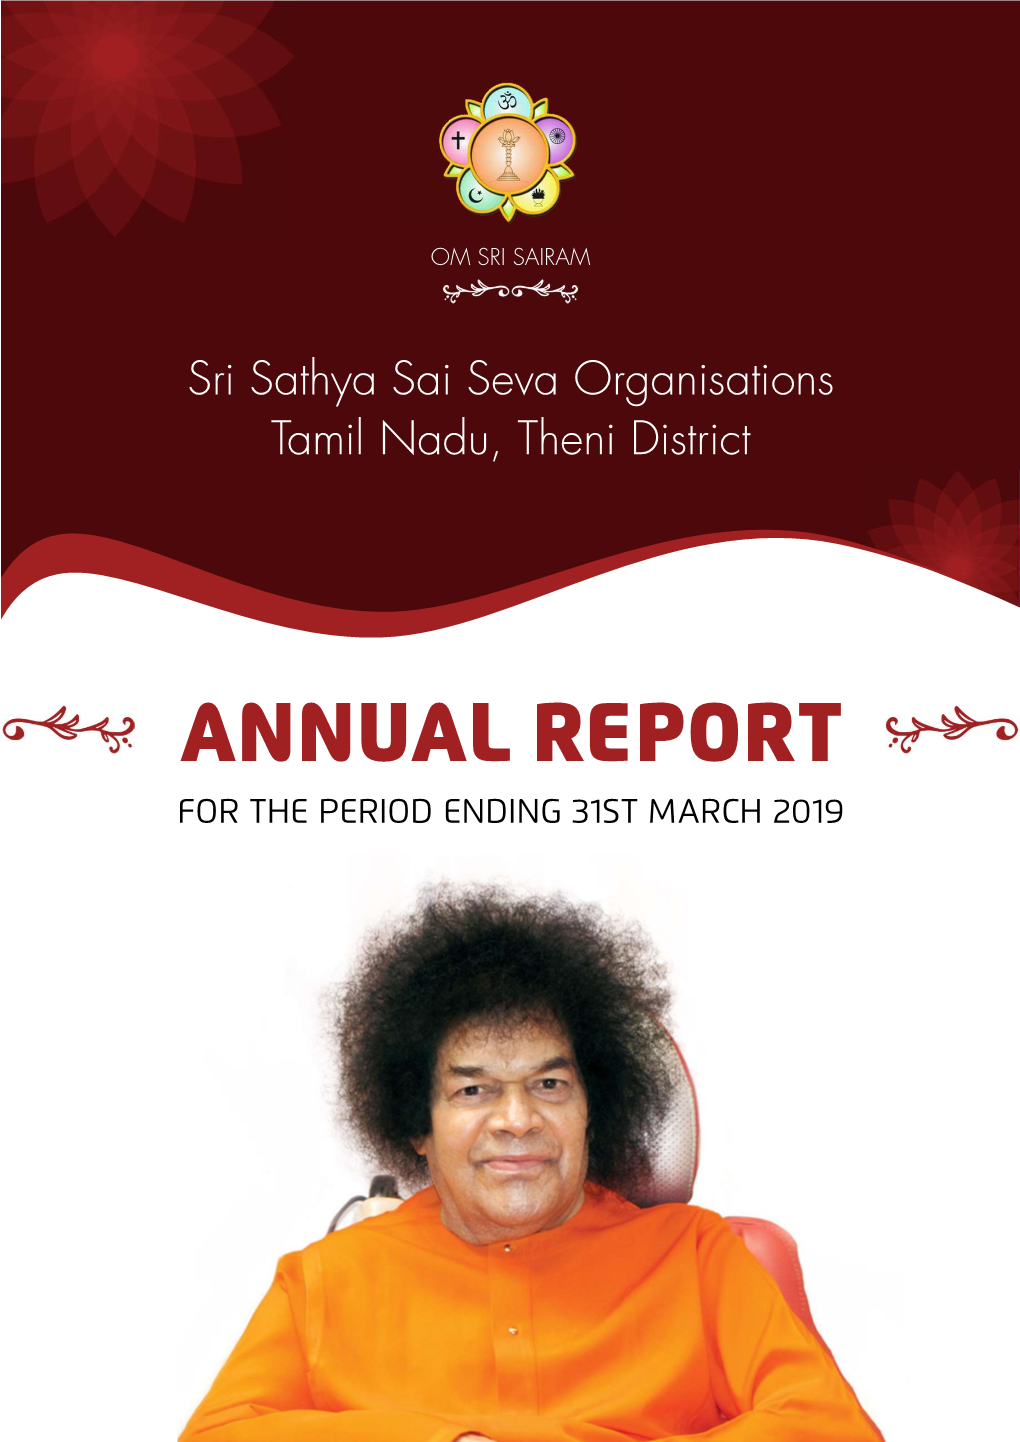 Sri Sathya Sai Seva Organisations Tamil Nadu, Theni District 01 Foreword from the District President